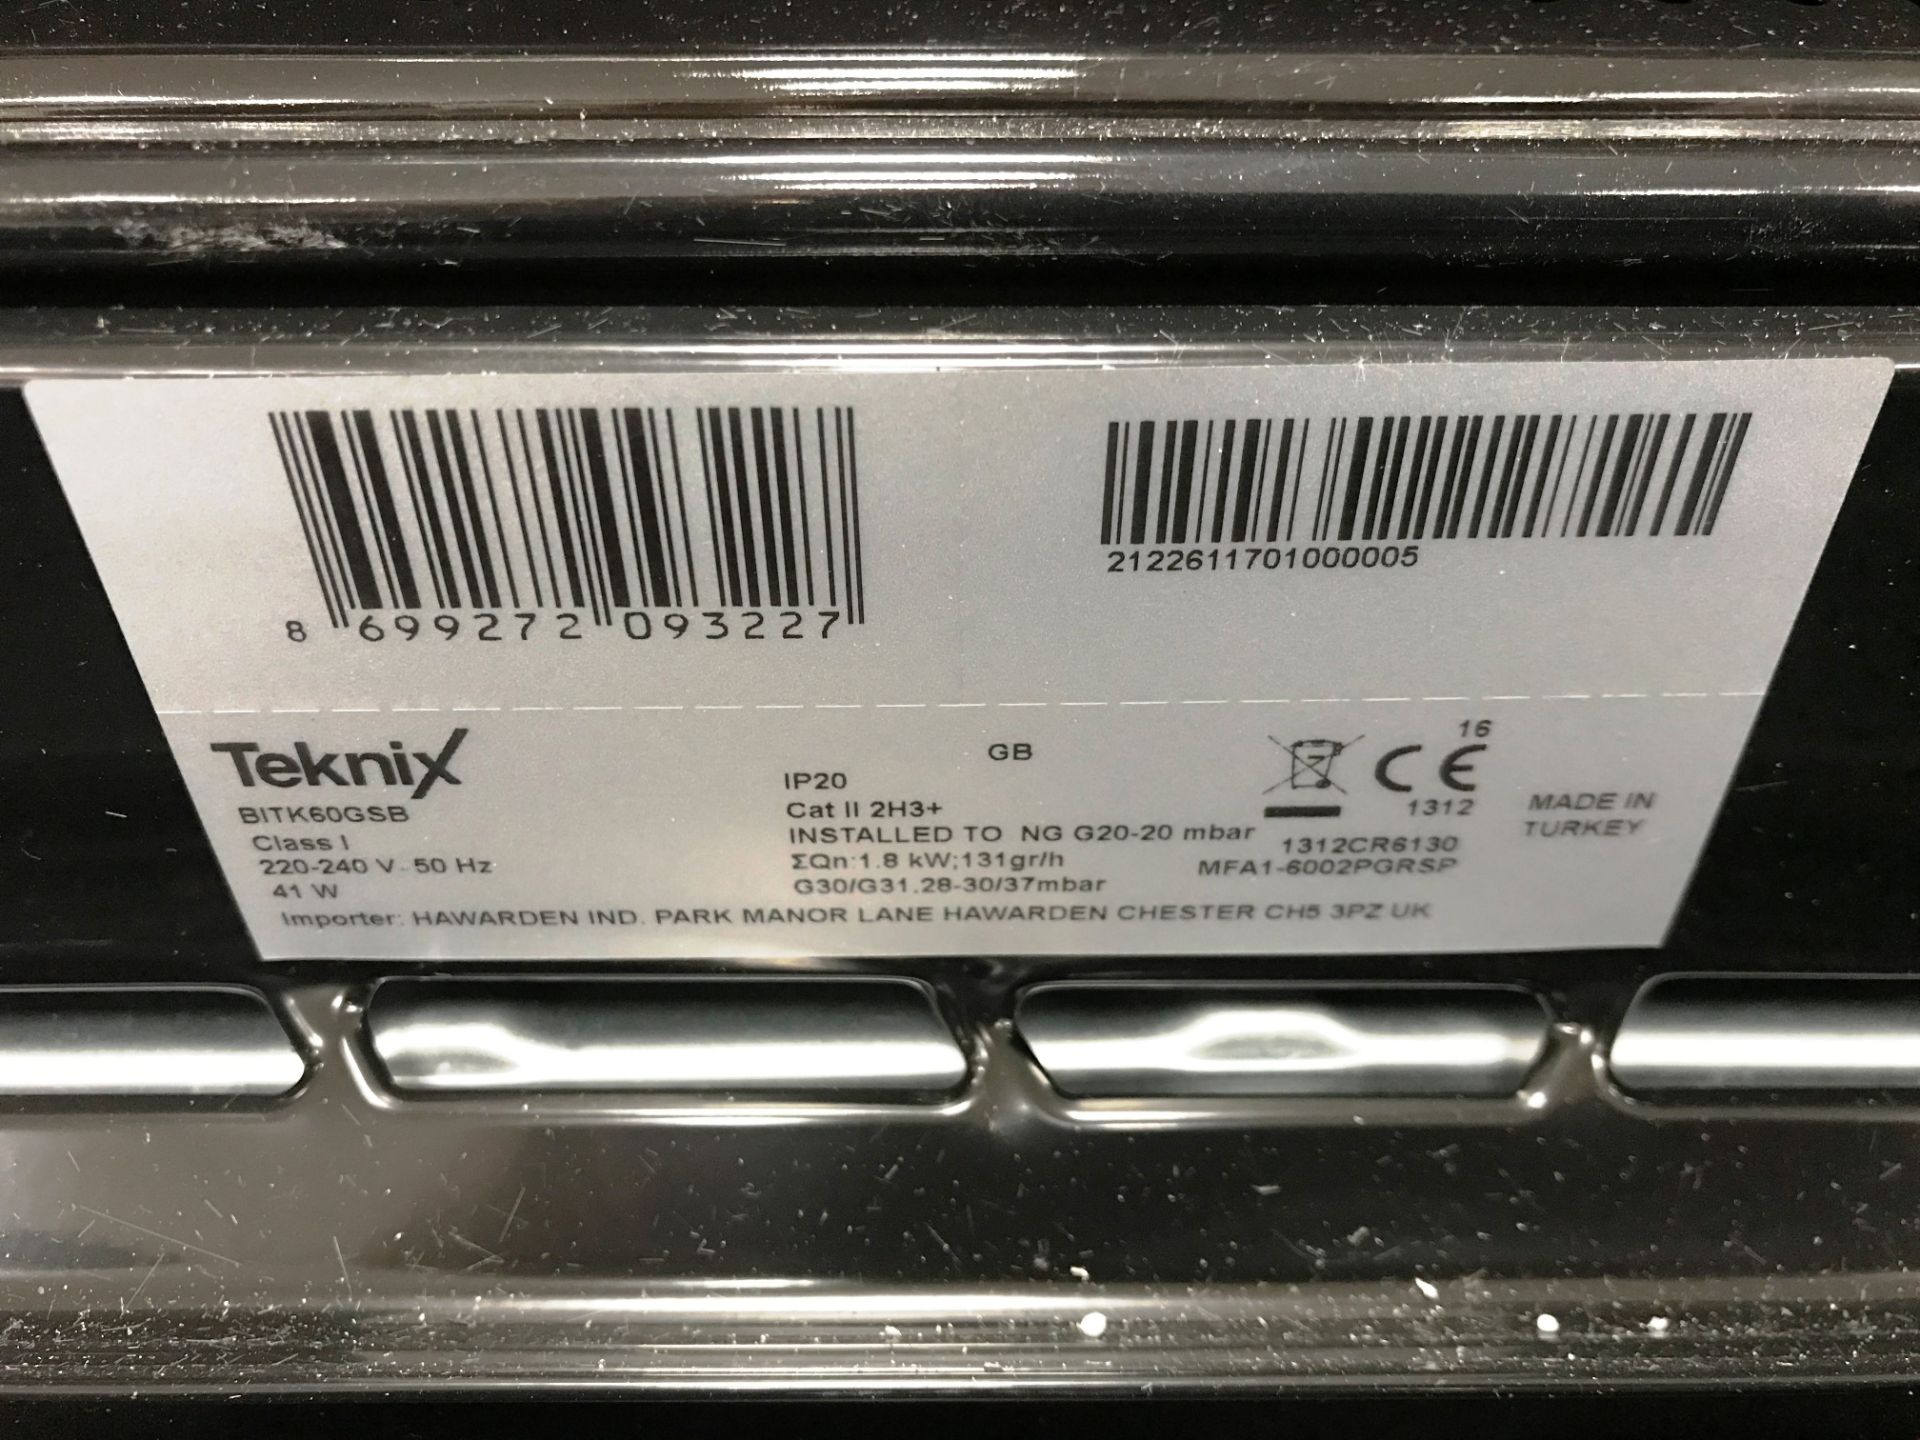 Ex Display Teknix BITK60GSB 60cm Gas Single Oven - RRP £259 - Image 3 of 3